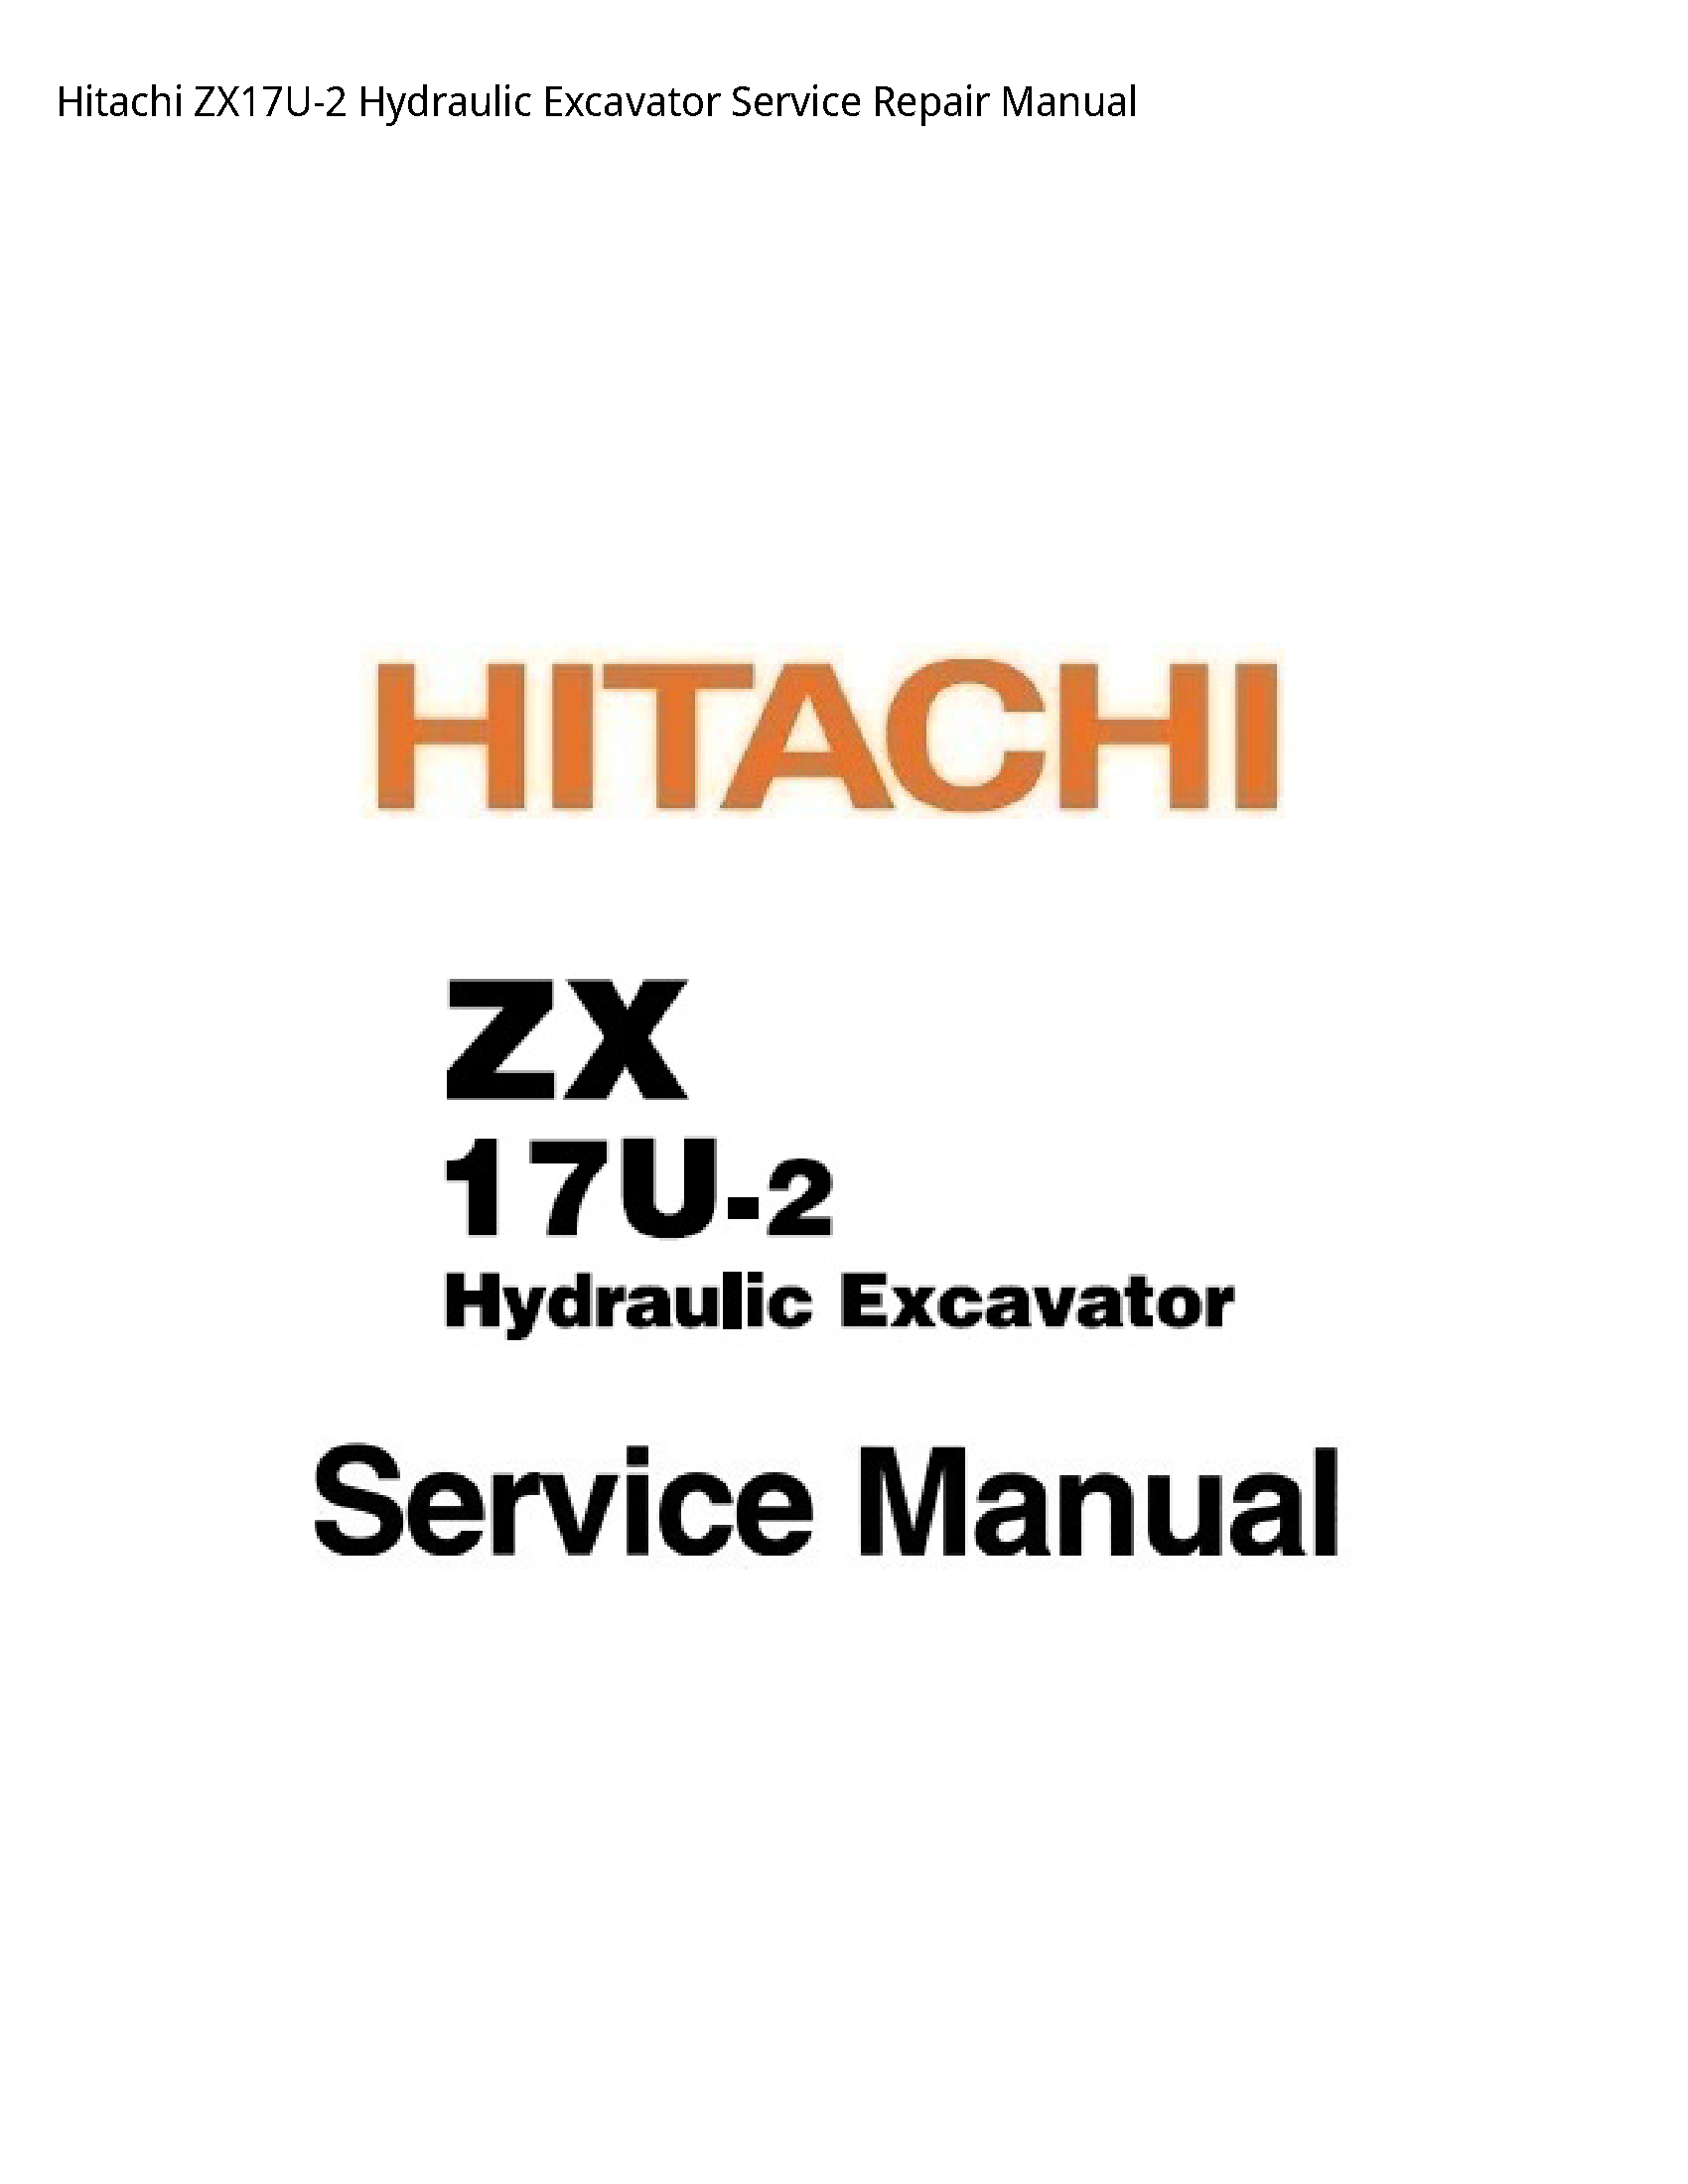 Hitachi ZX17U-2 Hydraulic Excavator manual